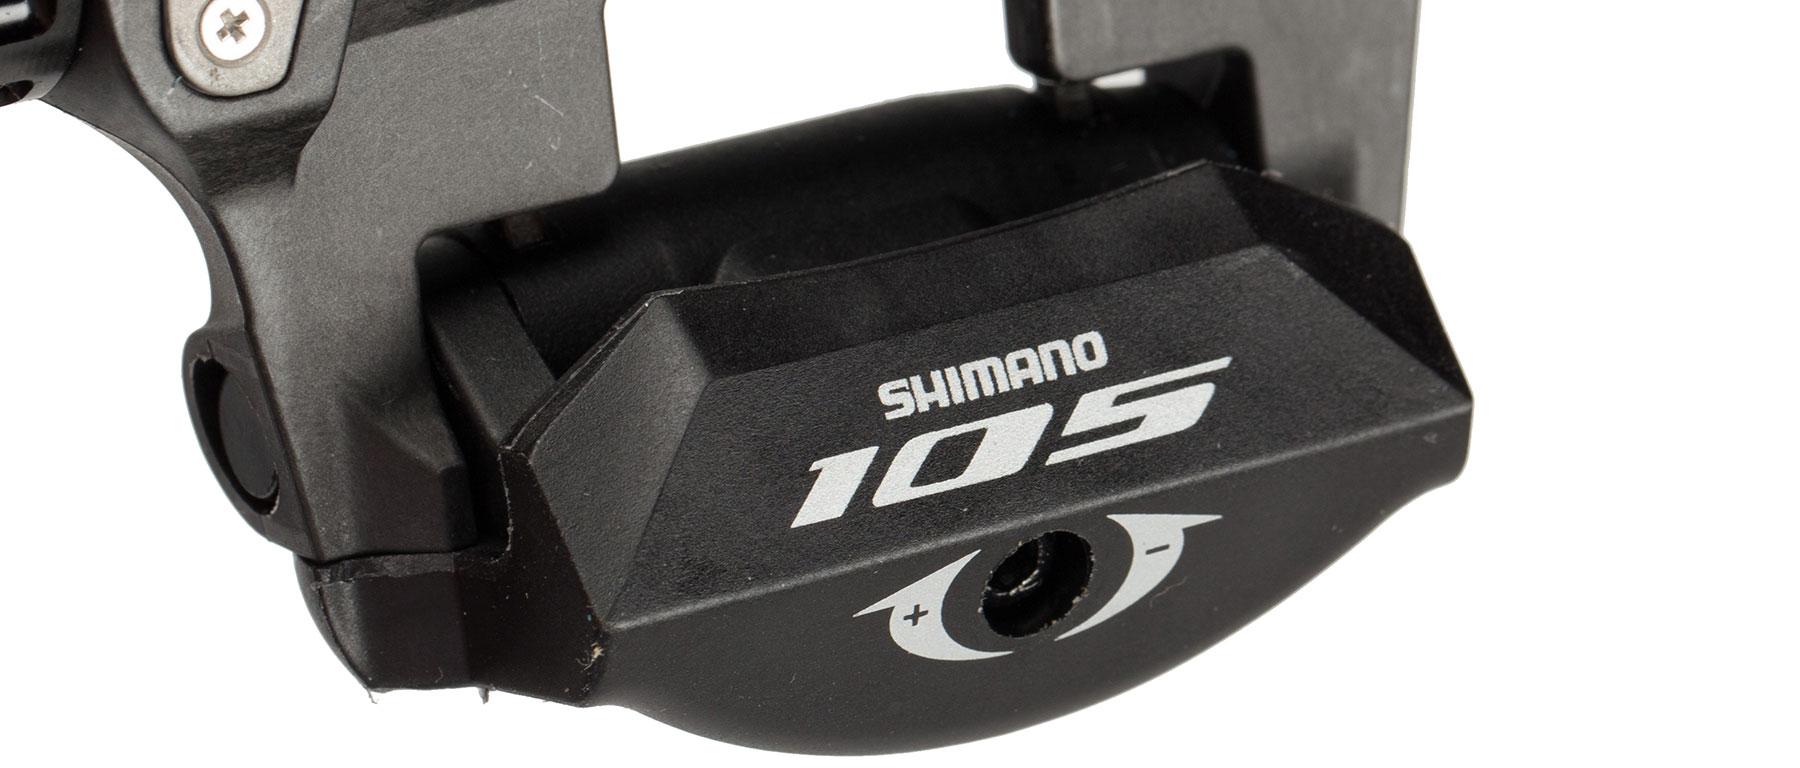 Shimano 105 PD-R7000 SPD-SL Pedals